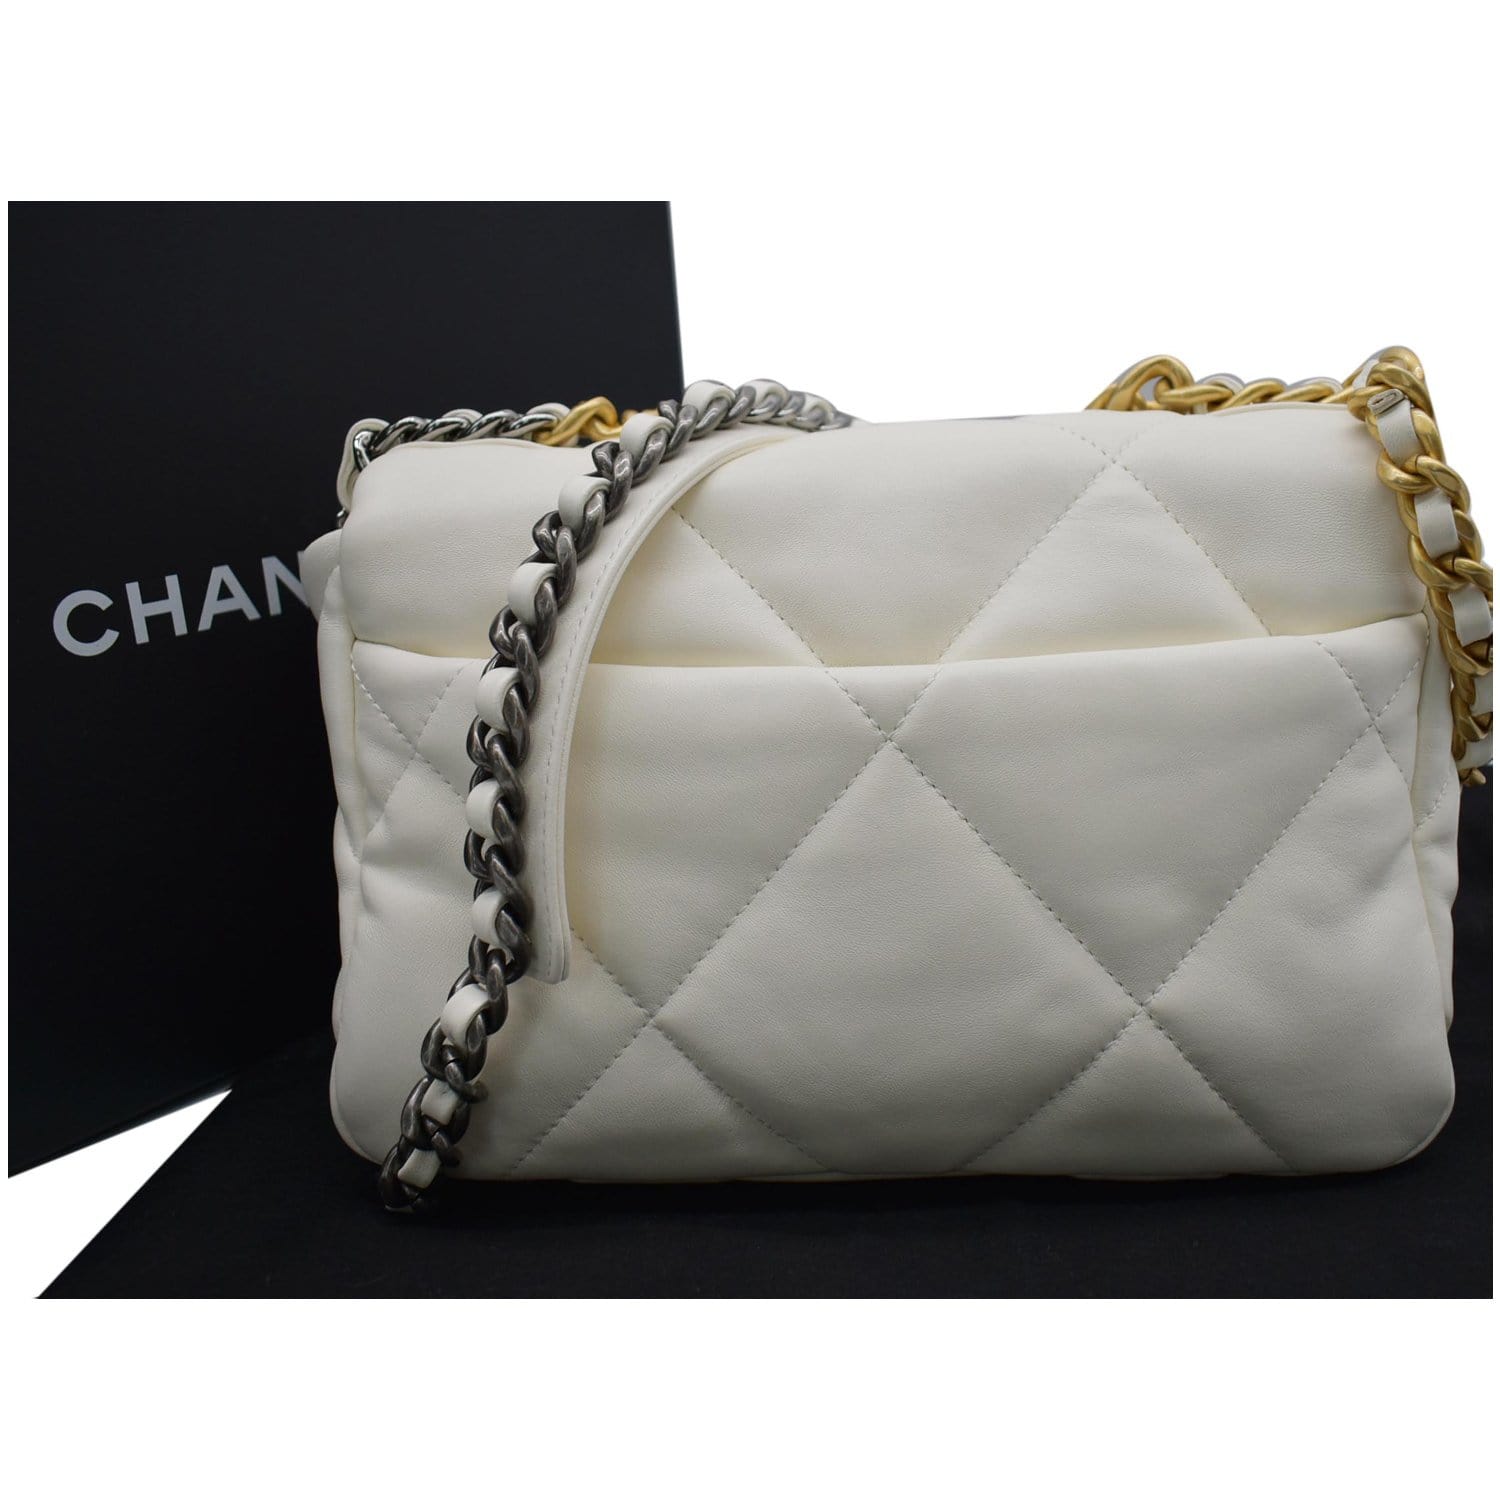 chanel white bag small